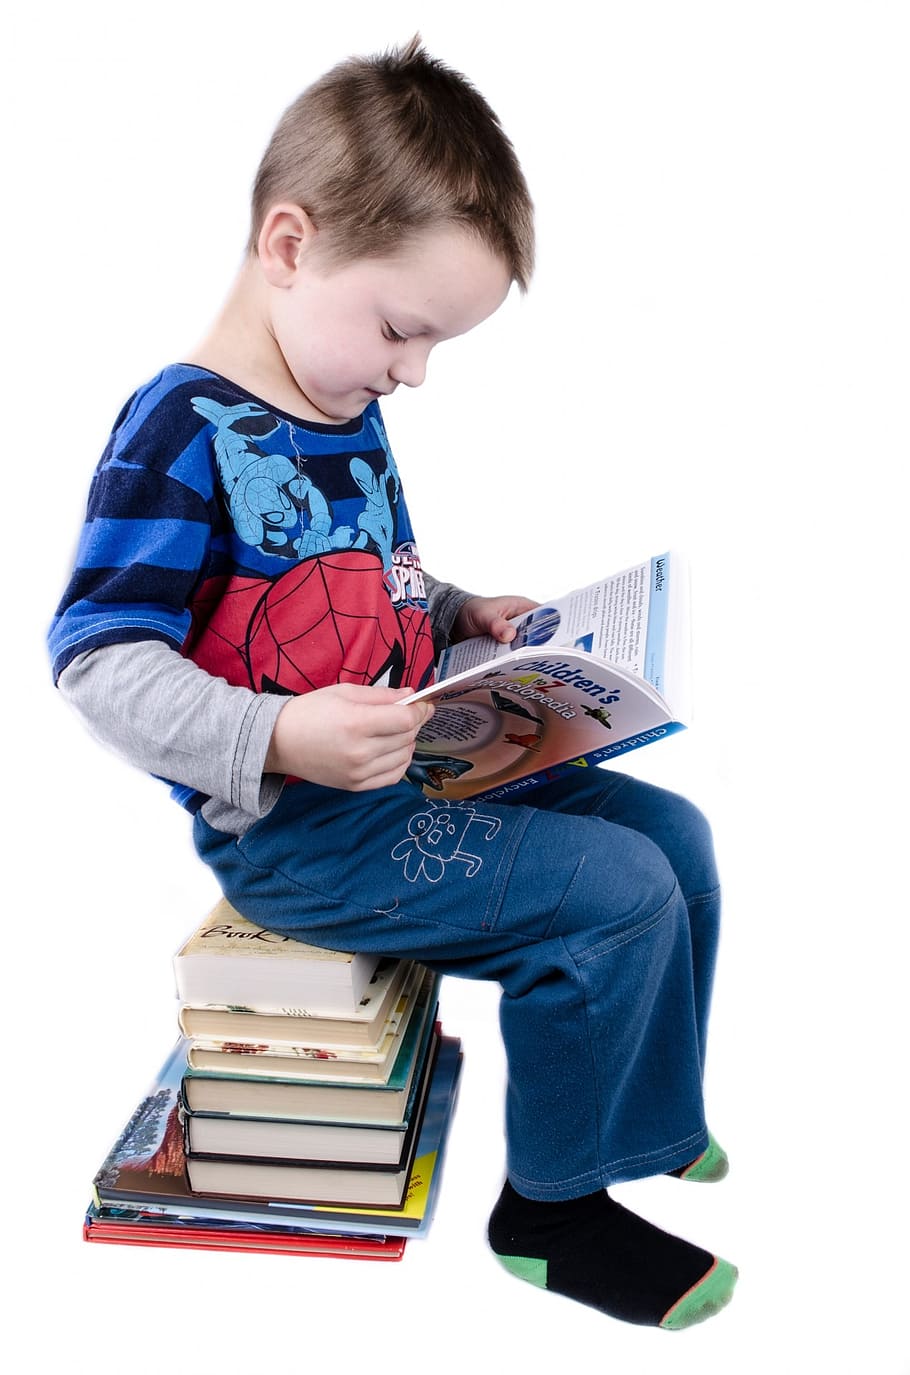 boy, sitting, reading book, child, book, studying, isolated, educational, wisdom, preschooler